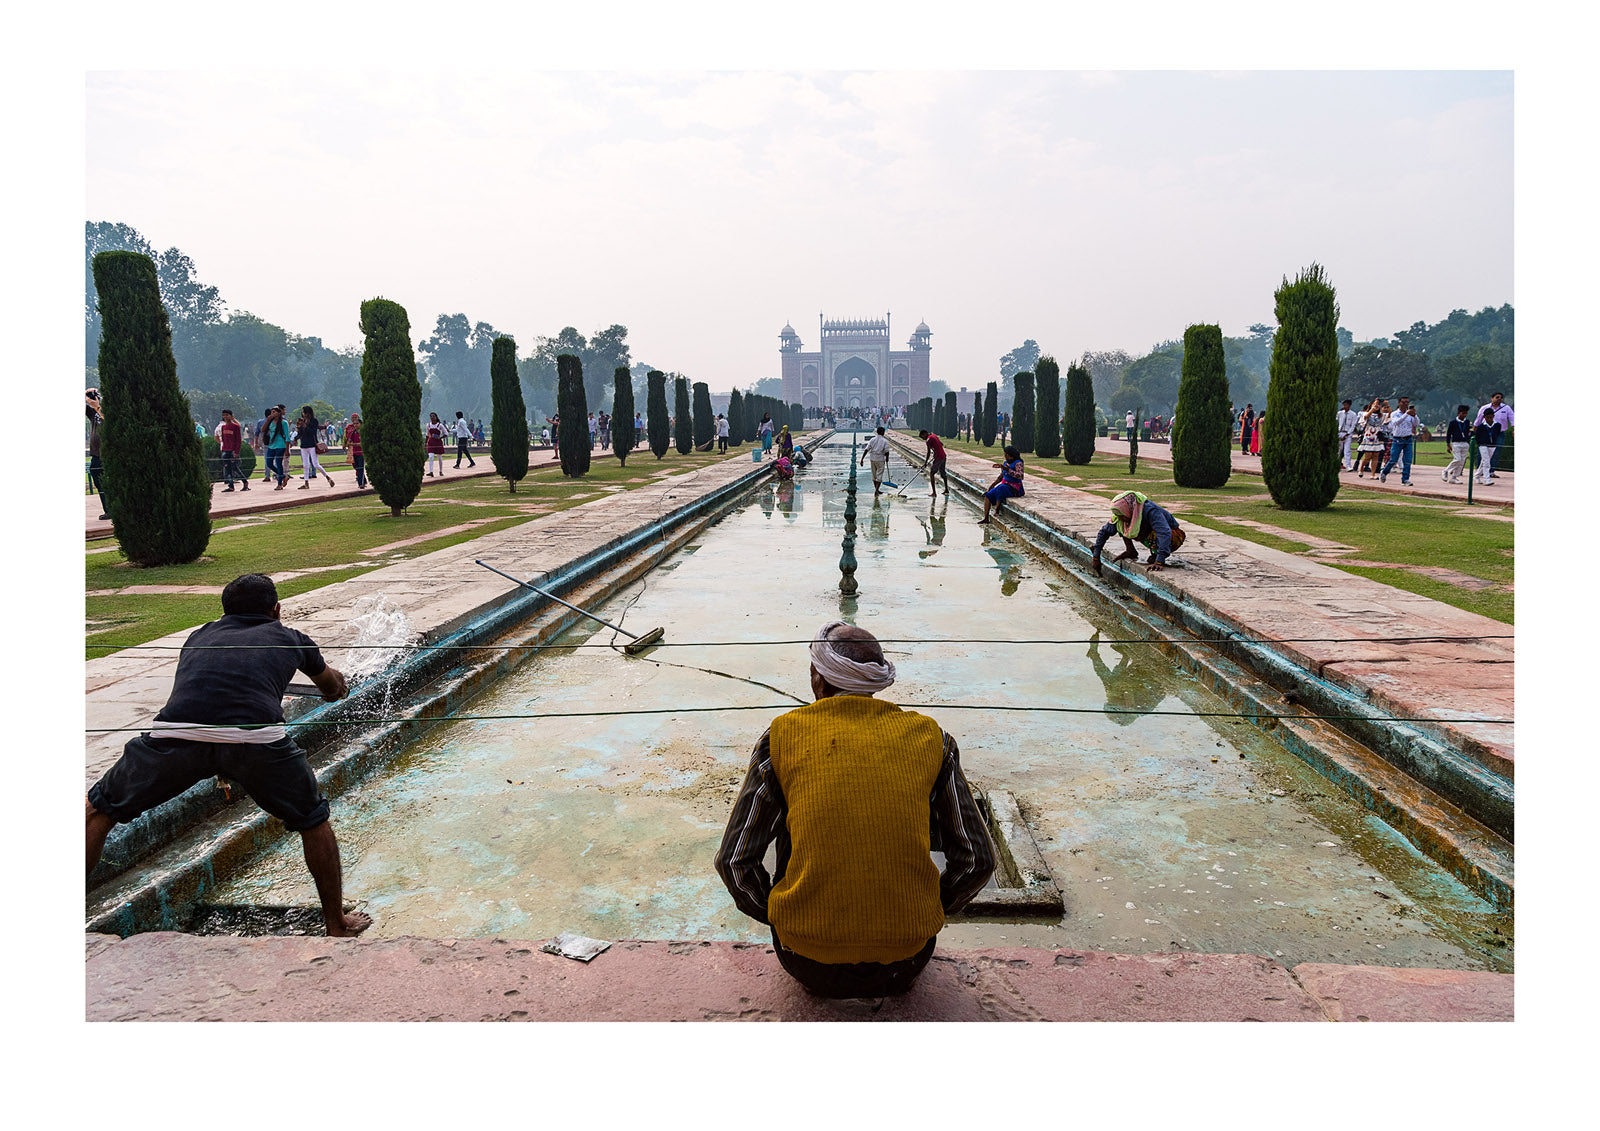 Labourers clean the reflection pool in the gardens of the Taj Mahal. Taj Mahal, Agra, India.